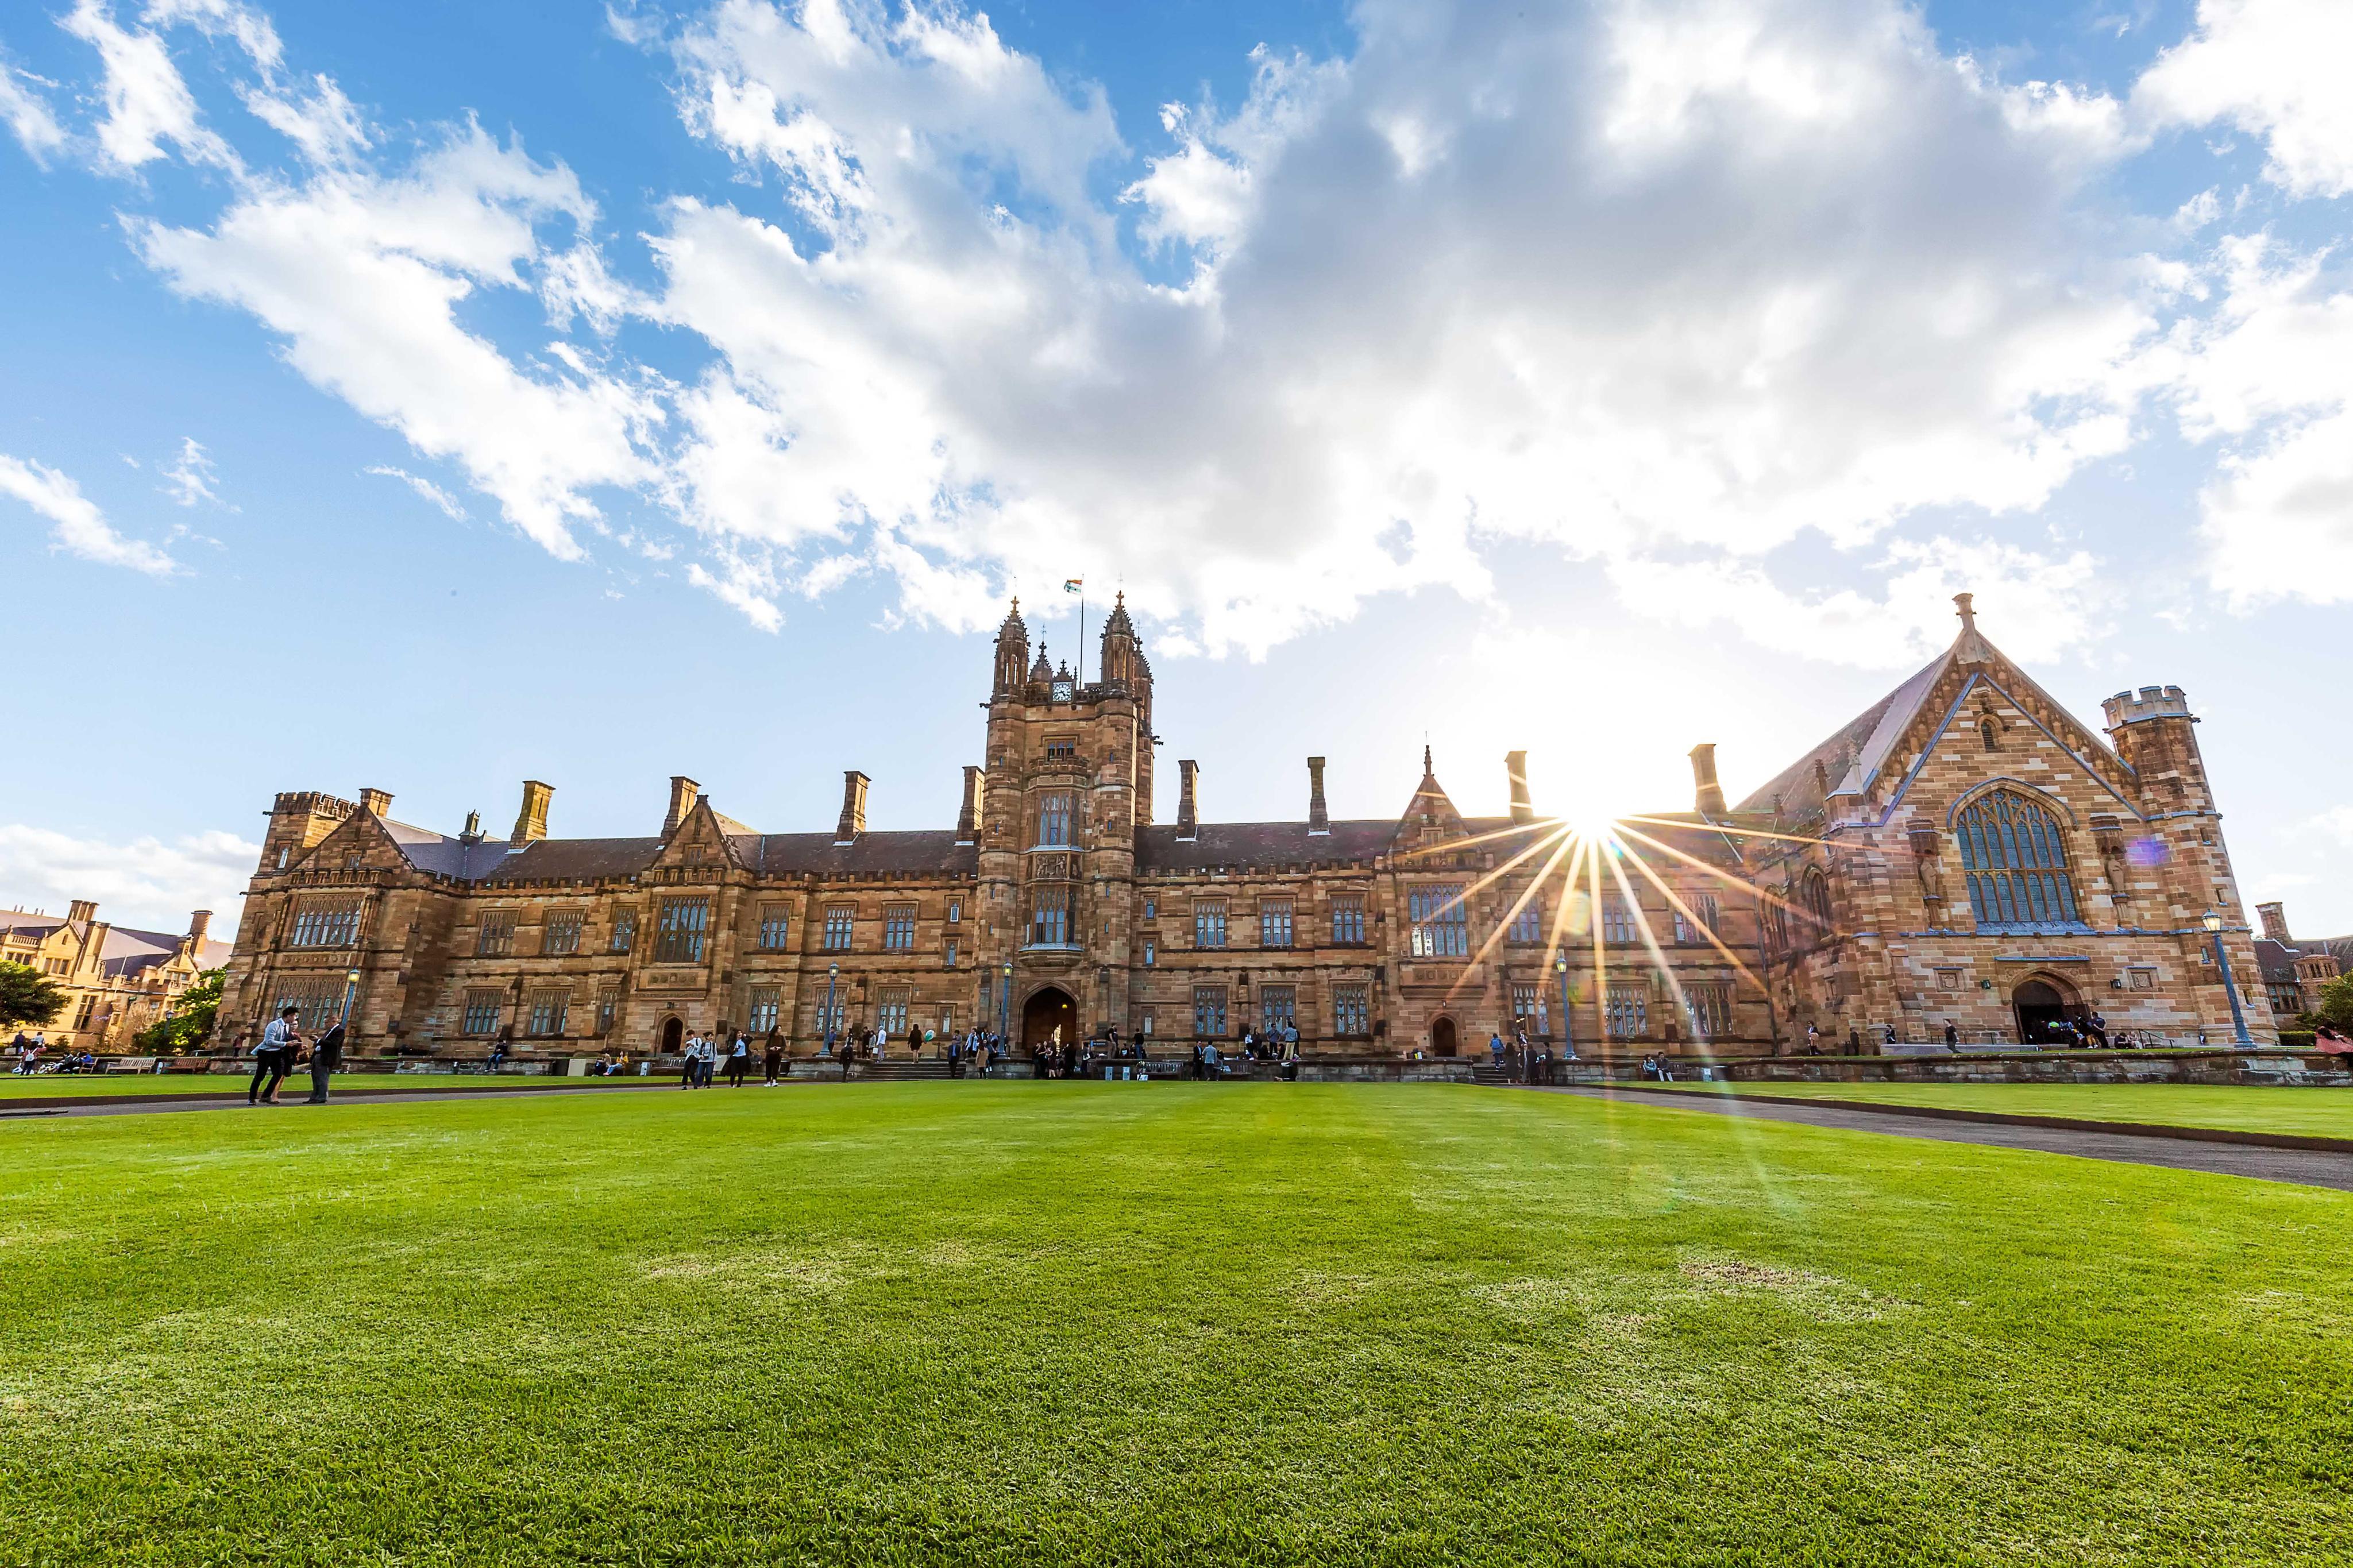 About us - The University of Sydney